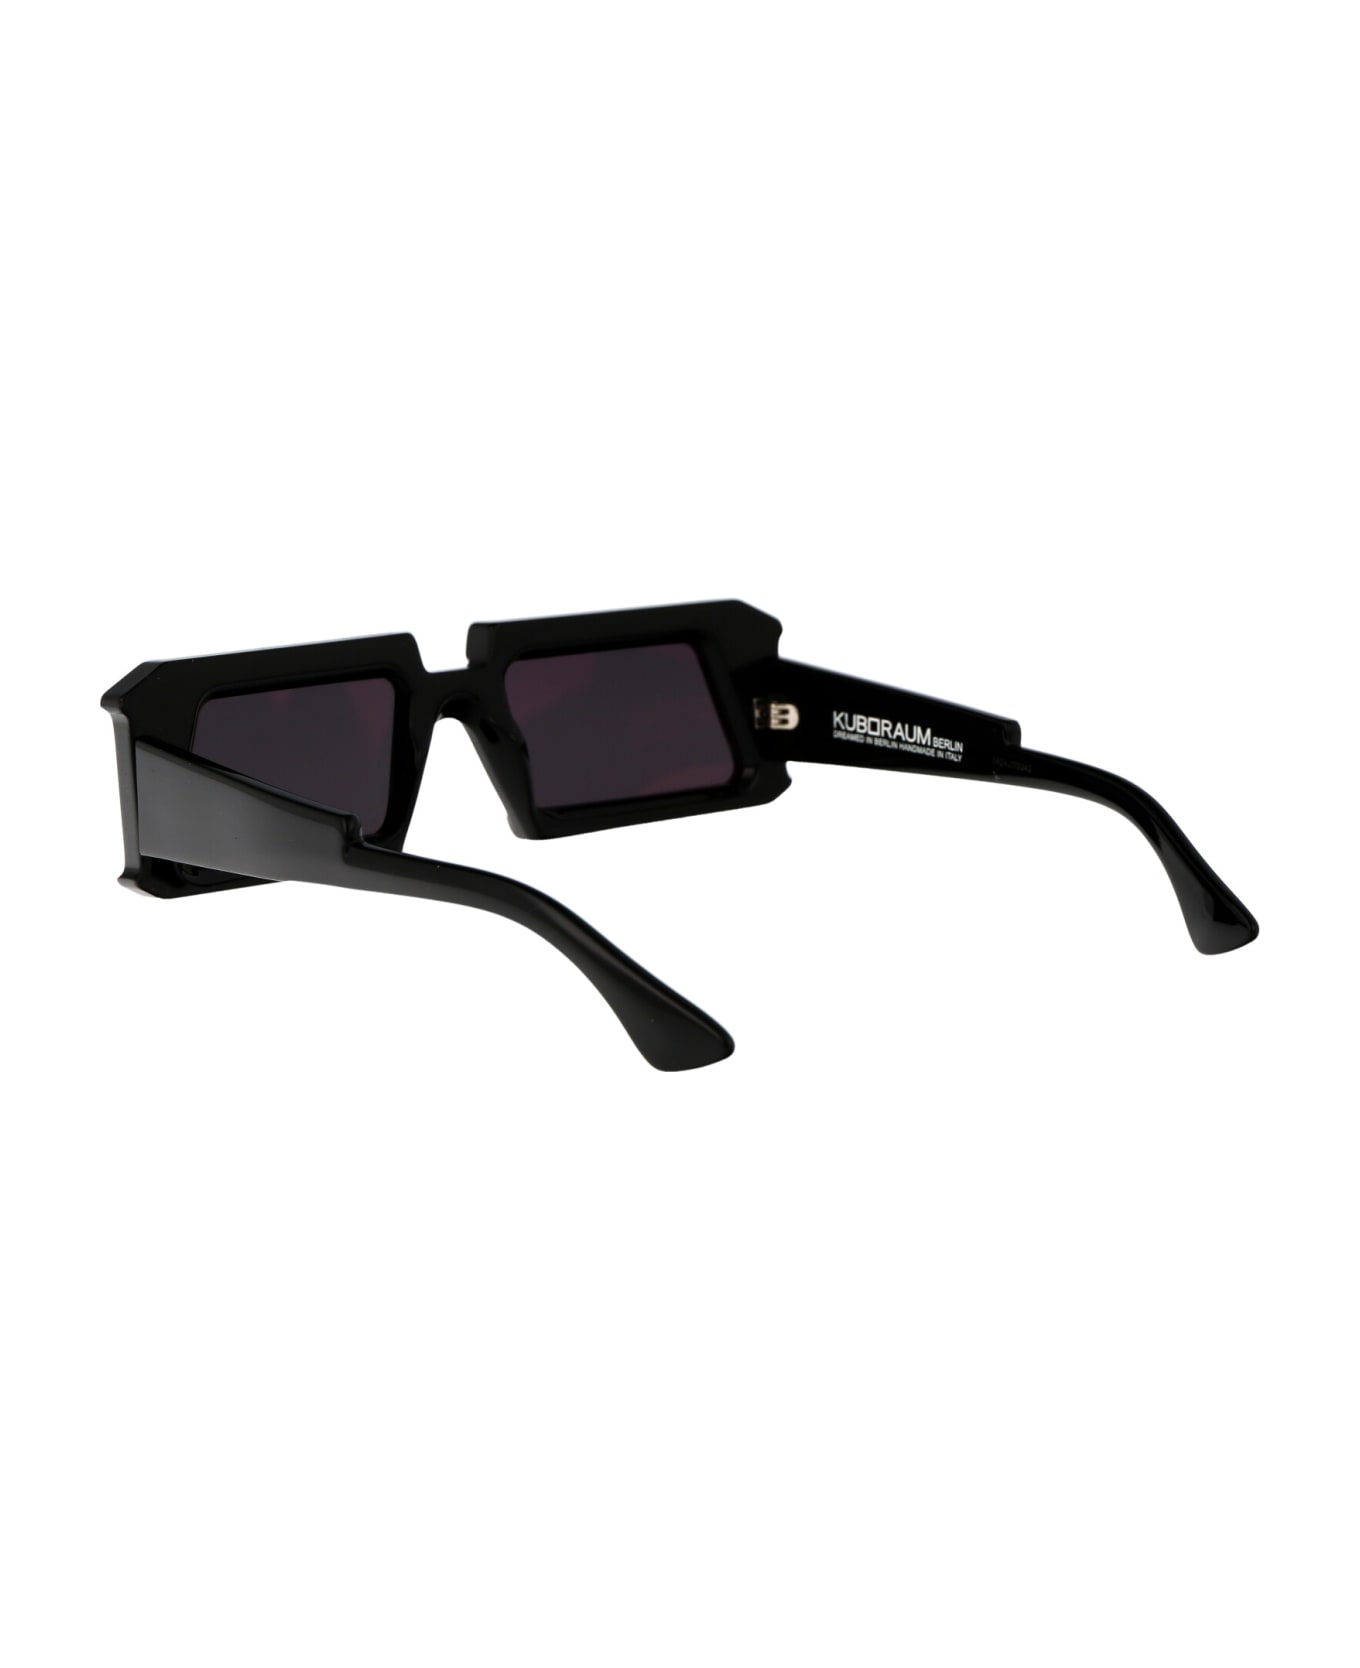 Kuboraum Maske X20 Sunglasses - BS CT 2grey